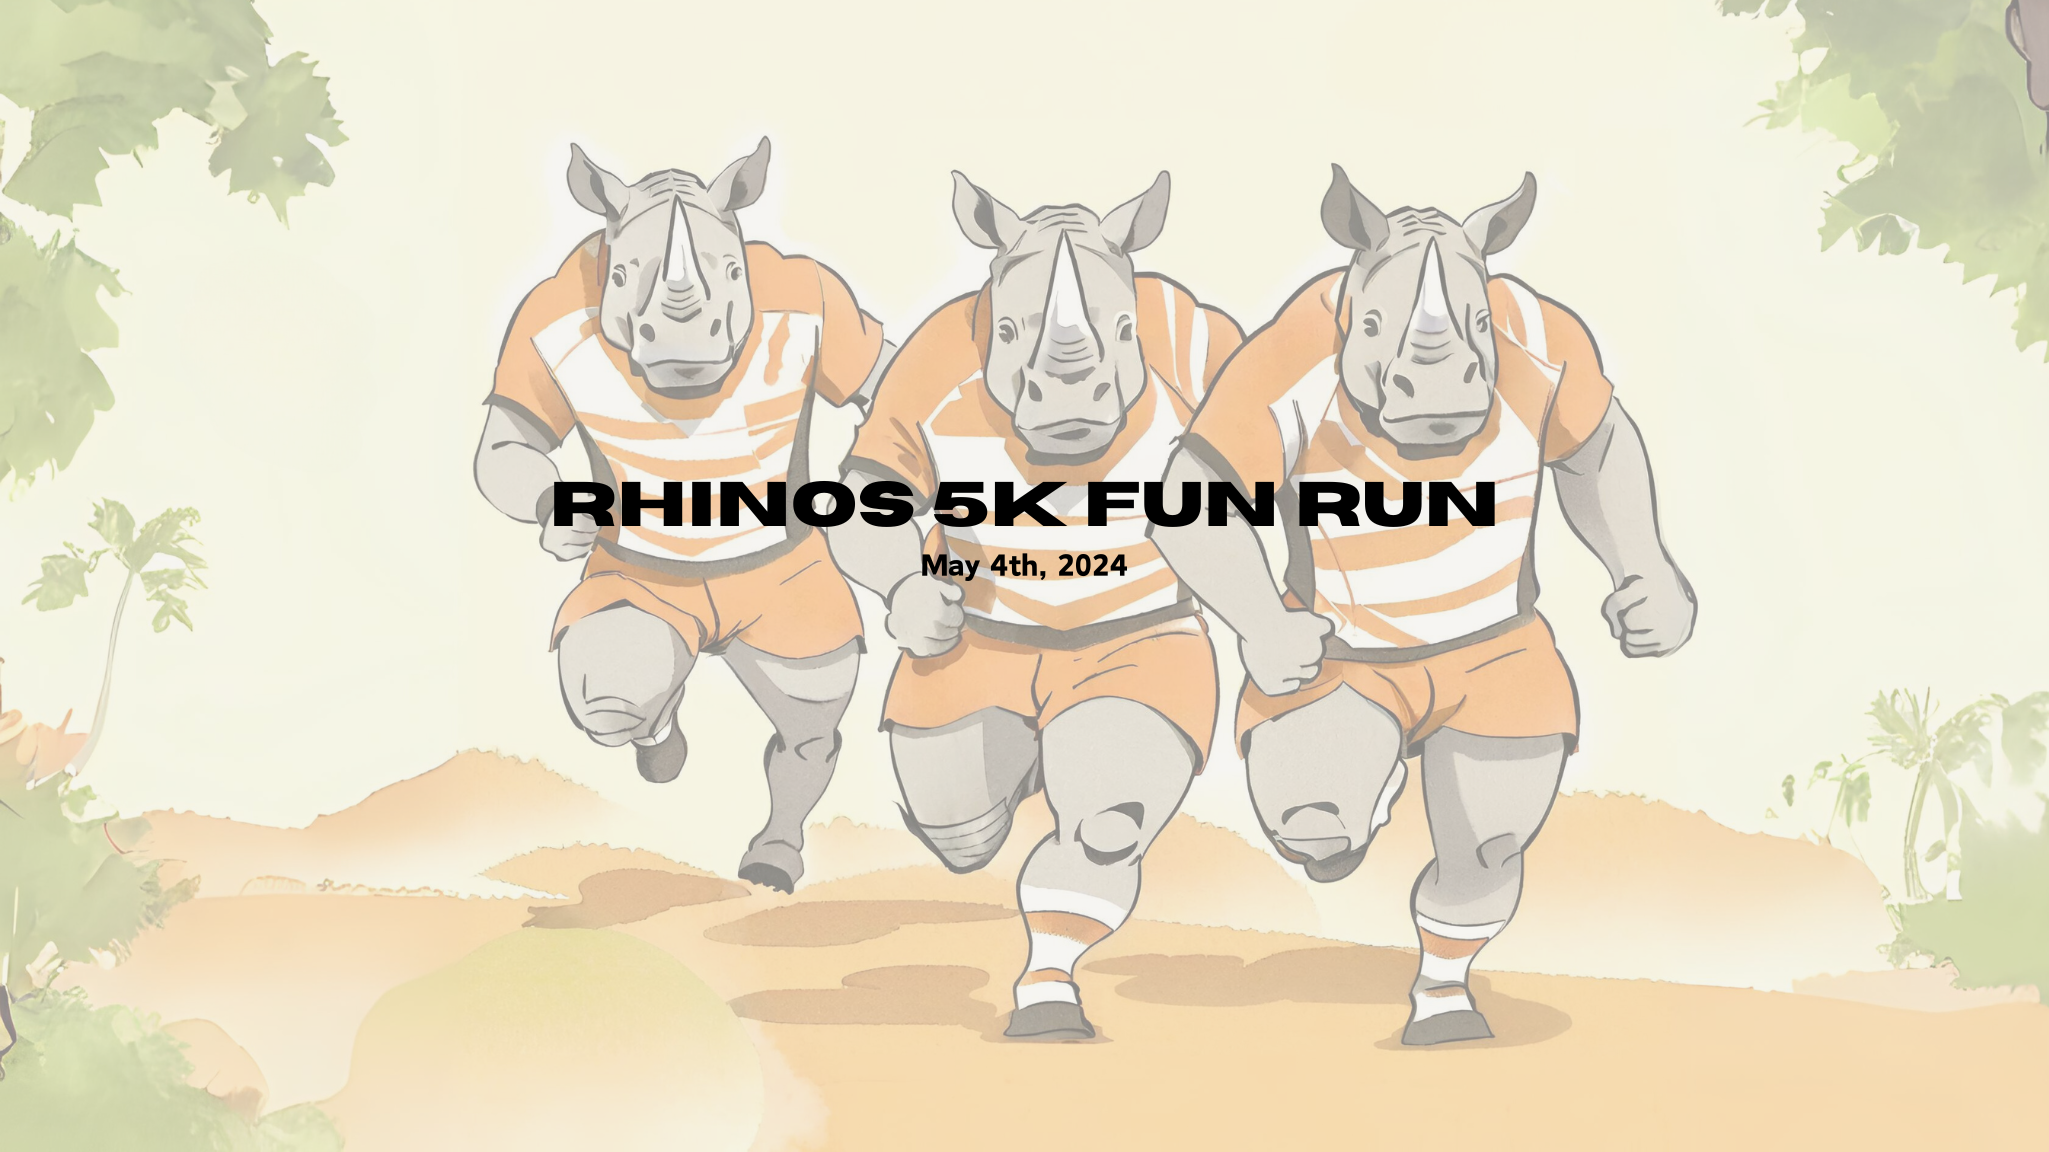 Rhinos 5K Fun Run logo on RaceRaves